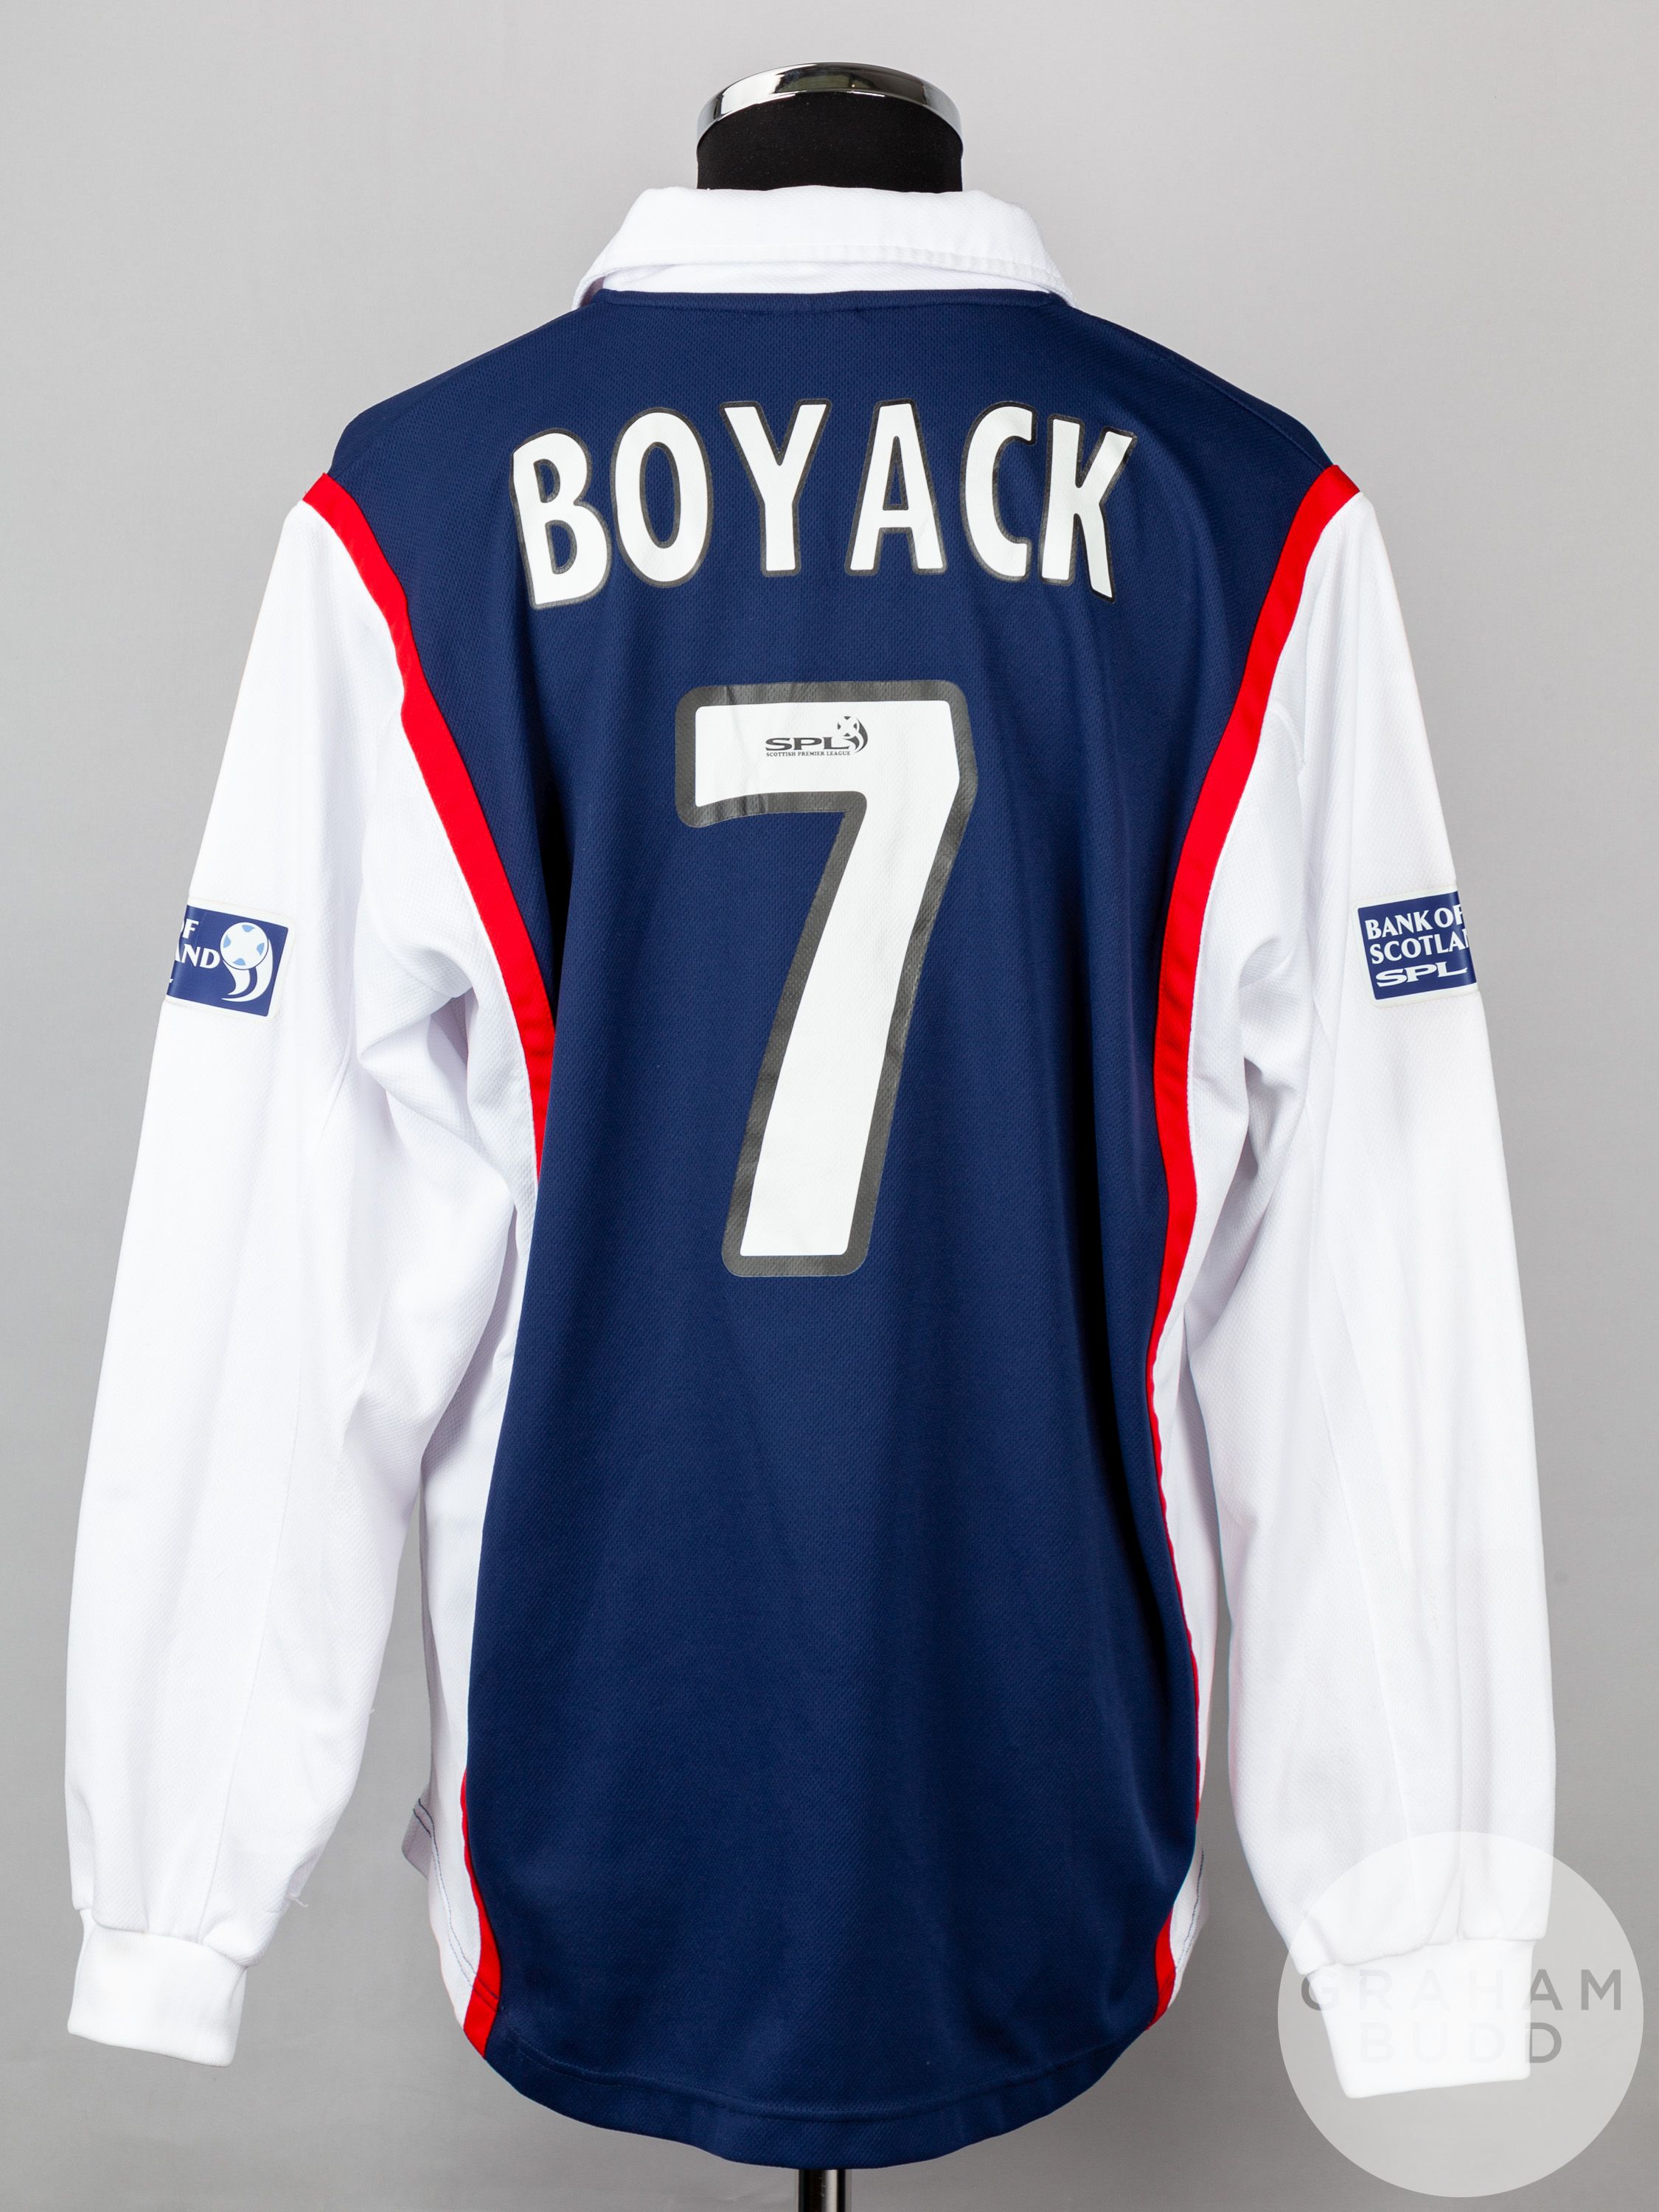 Steven Boyack dark blue and white No.7 Dundee long-sleeved shirt - Image 2 of 5